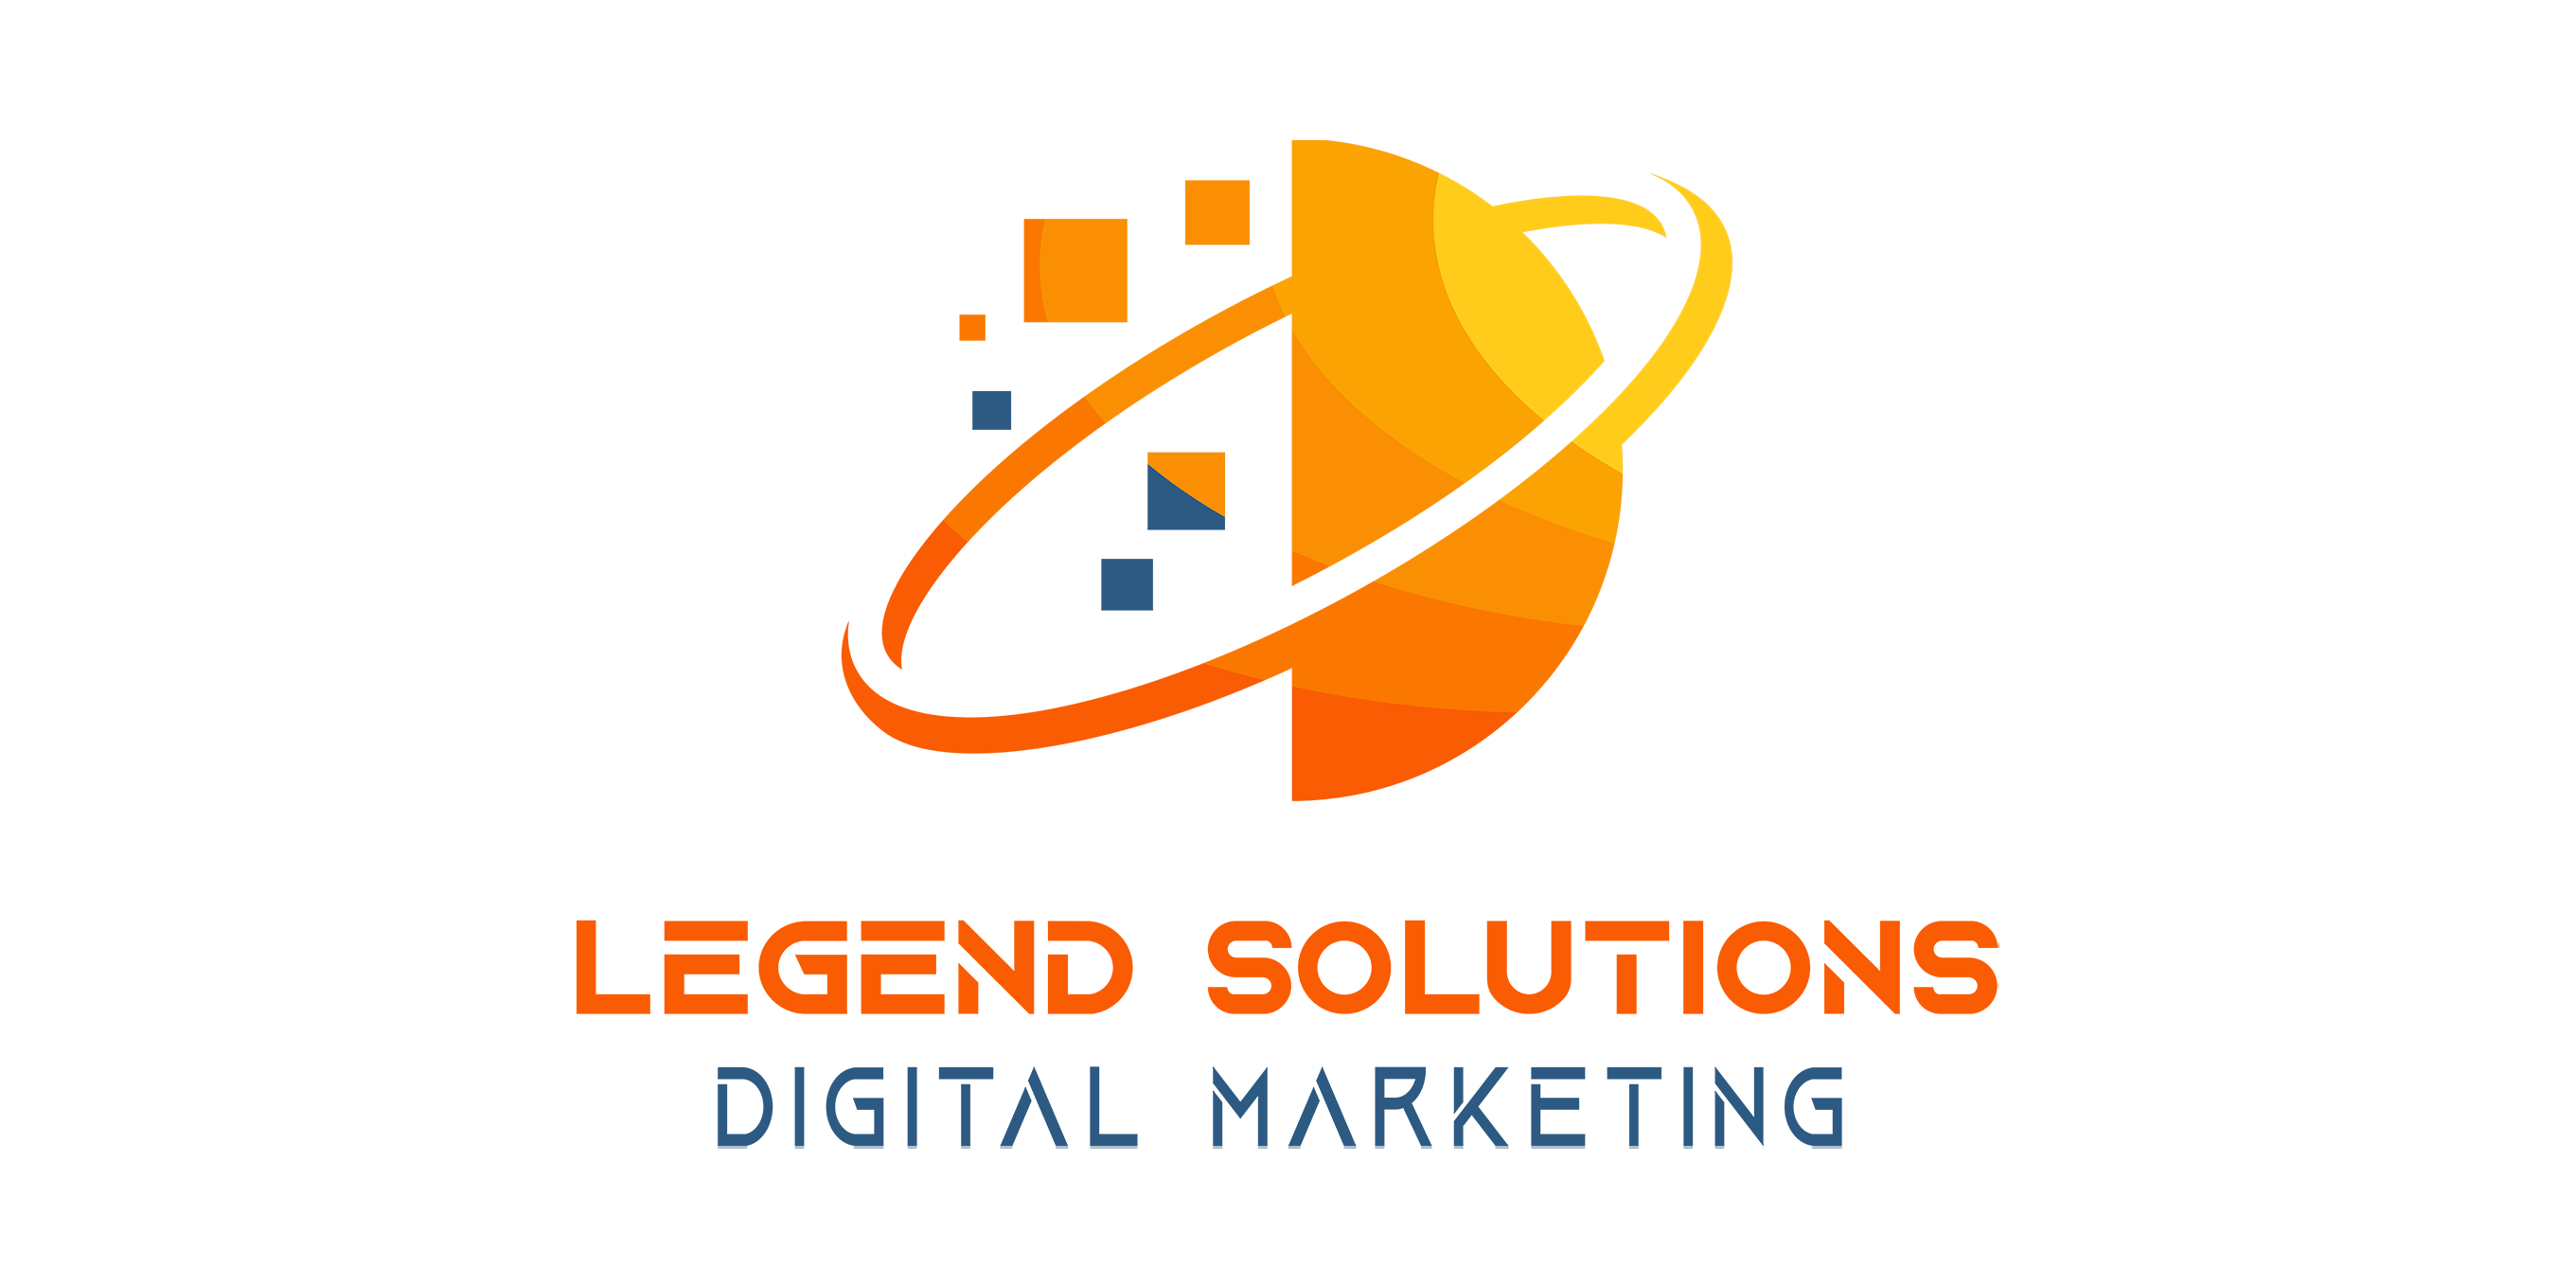 Dịch Vụ Quảng Cáo Legend Solutions Digital Marketing – Online Marketing